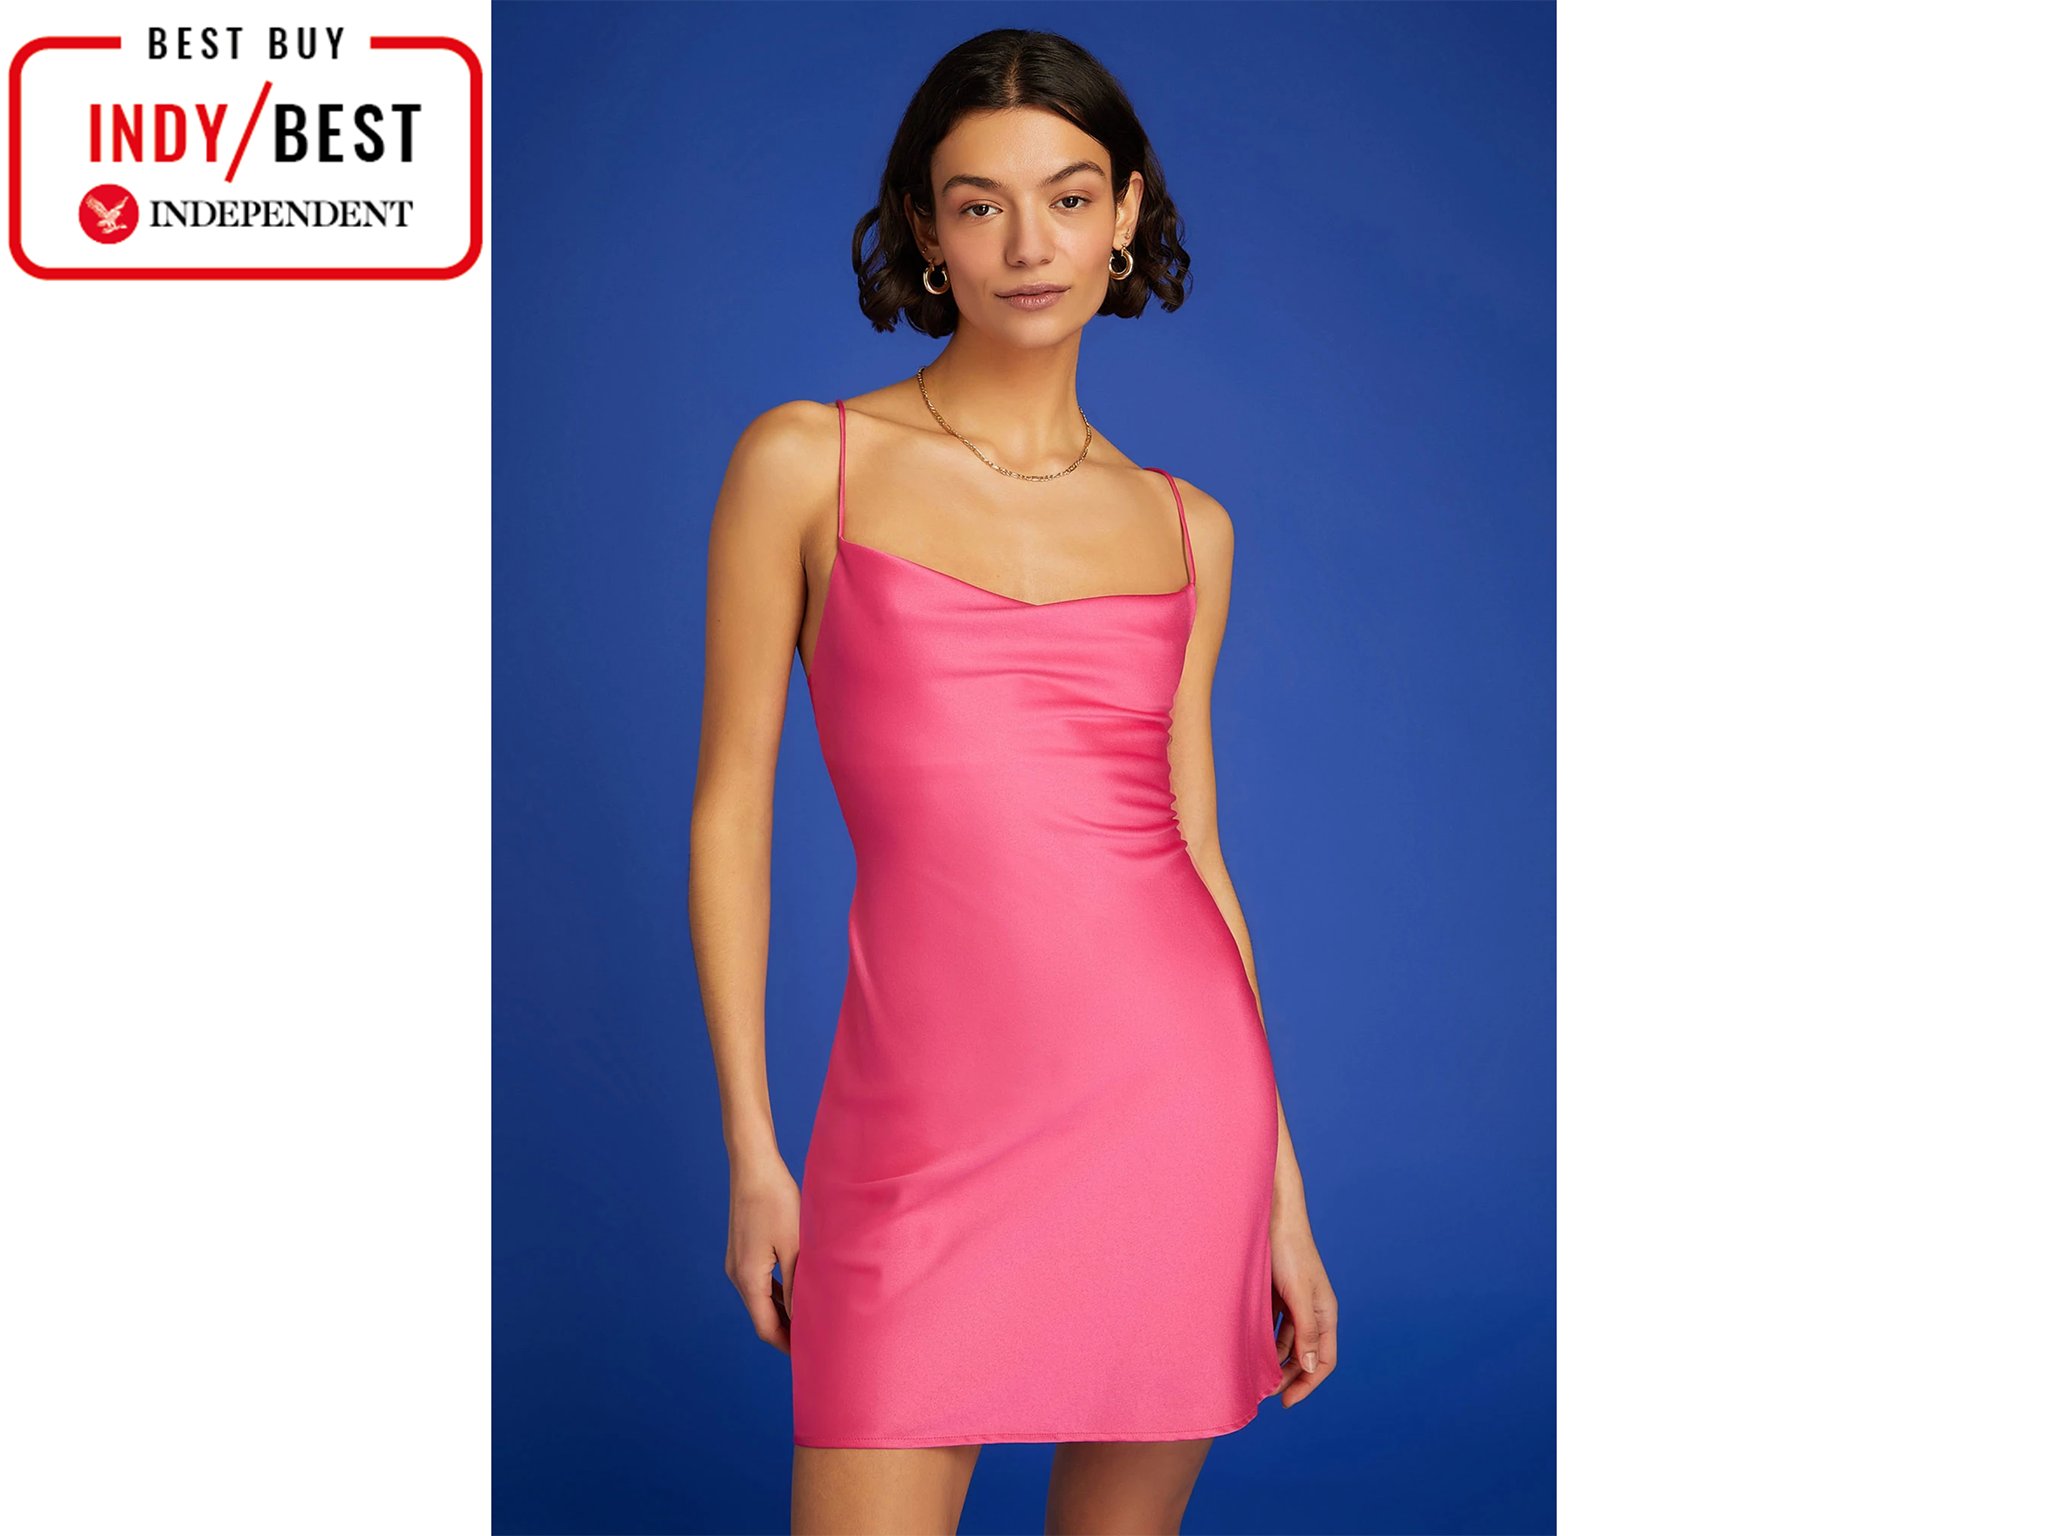 indybest-best-mini-dress-pink.png